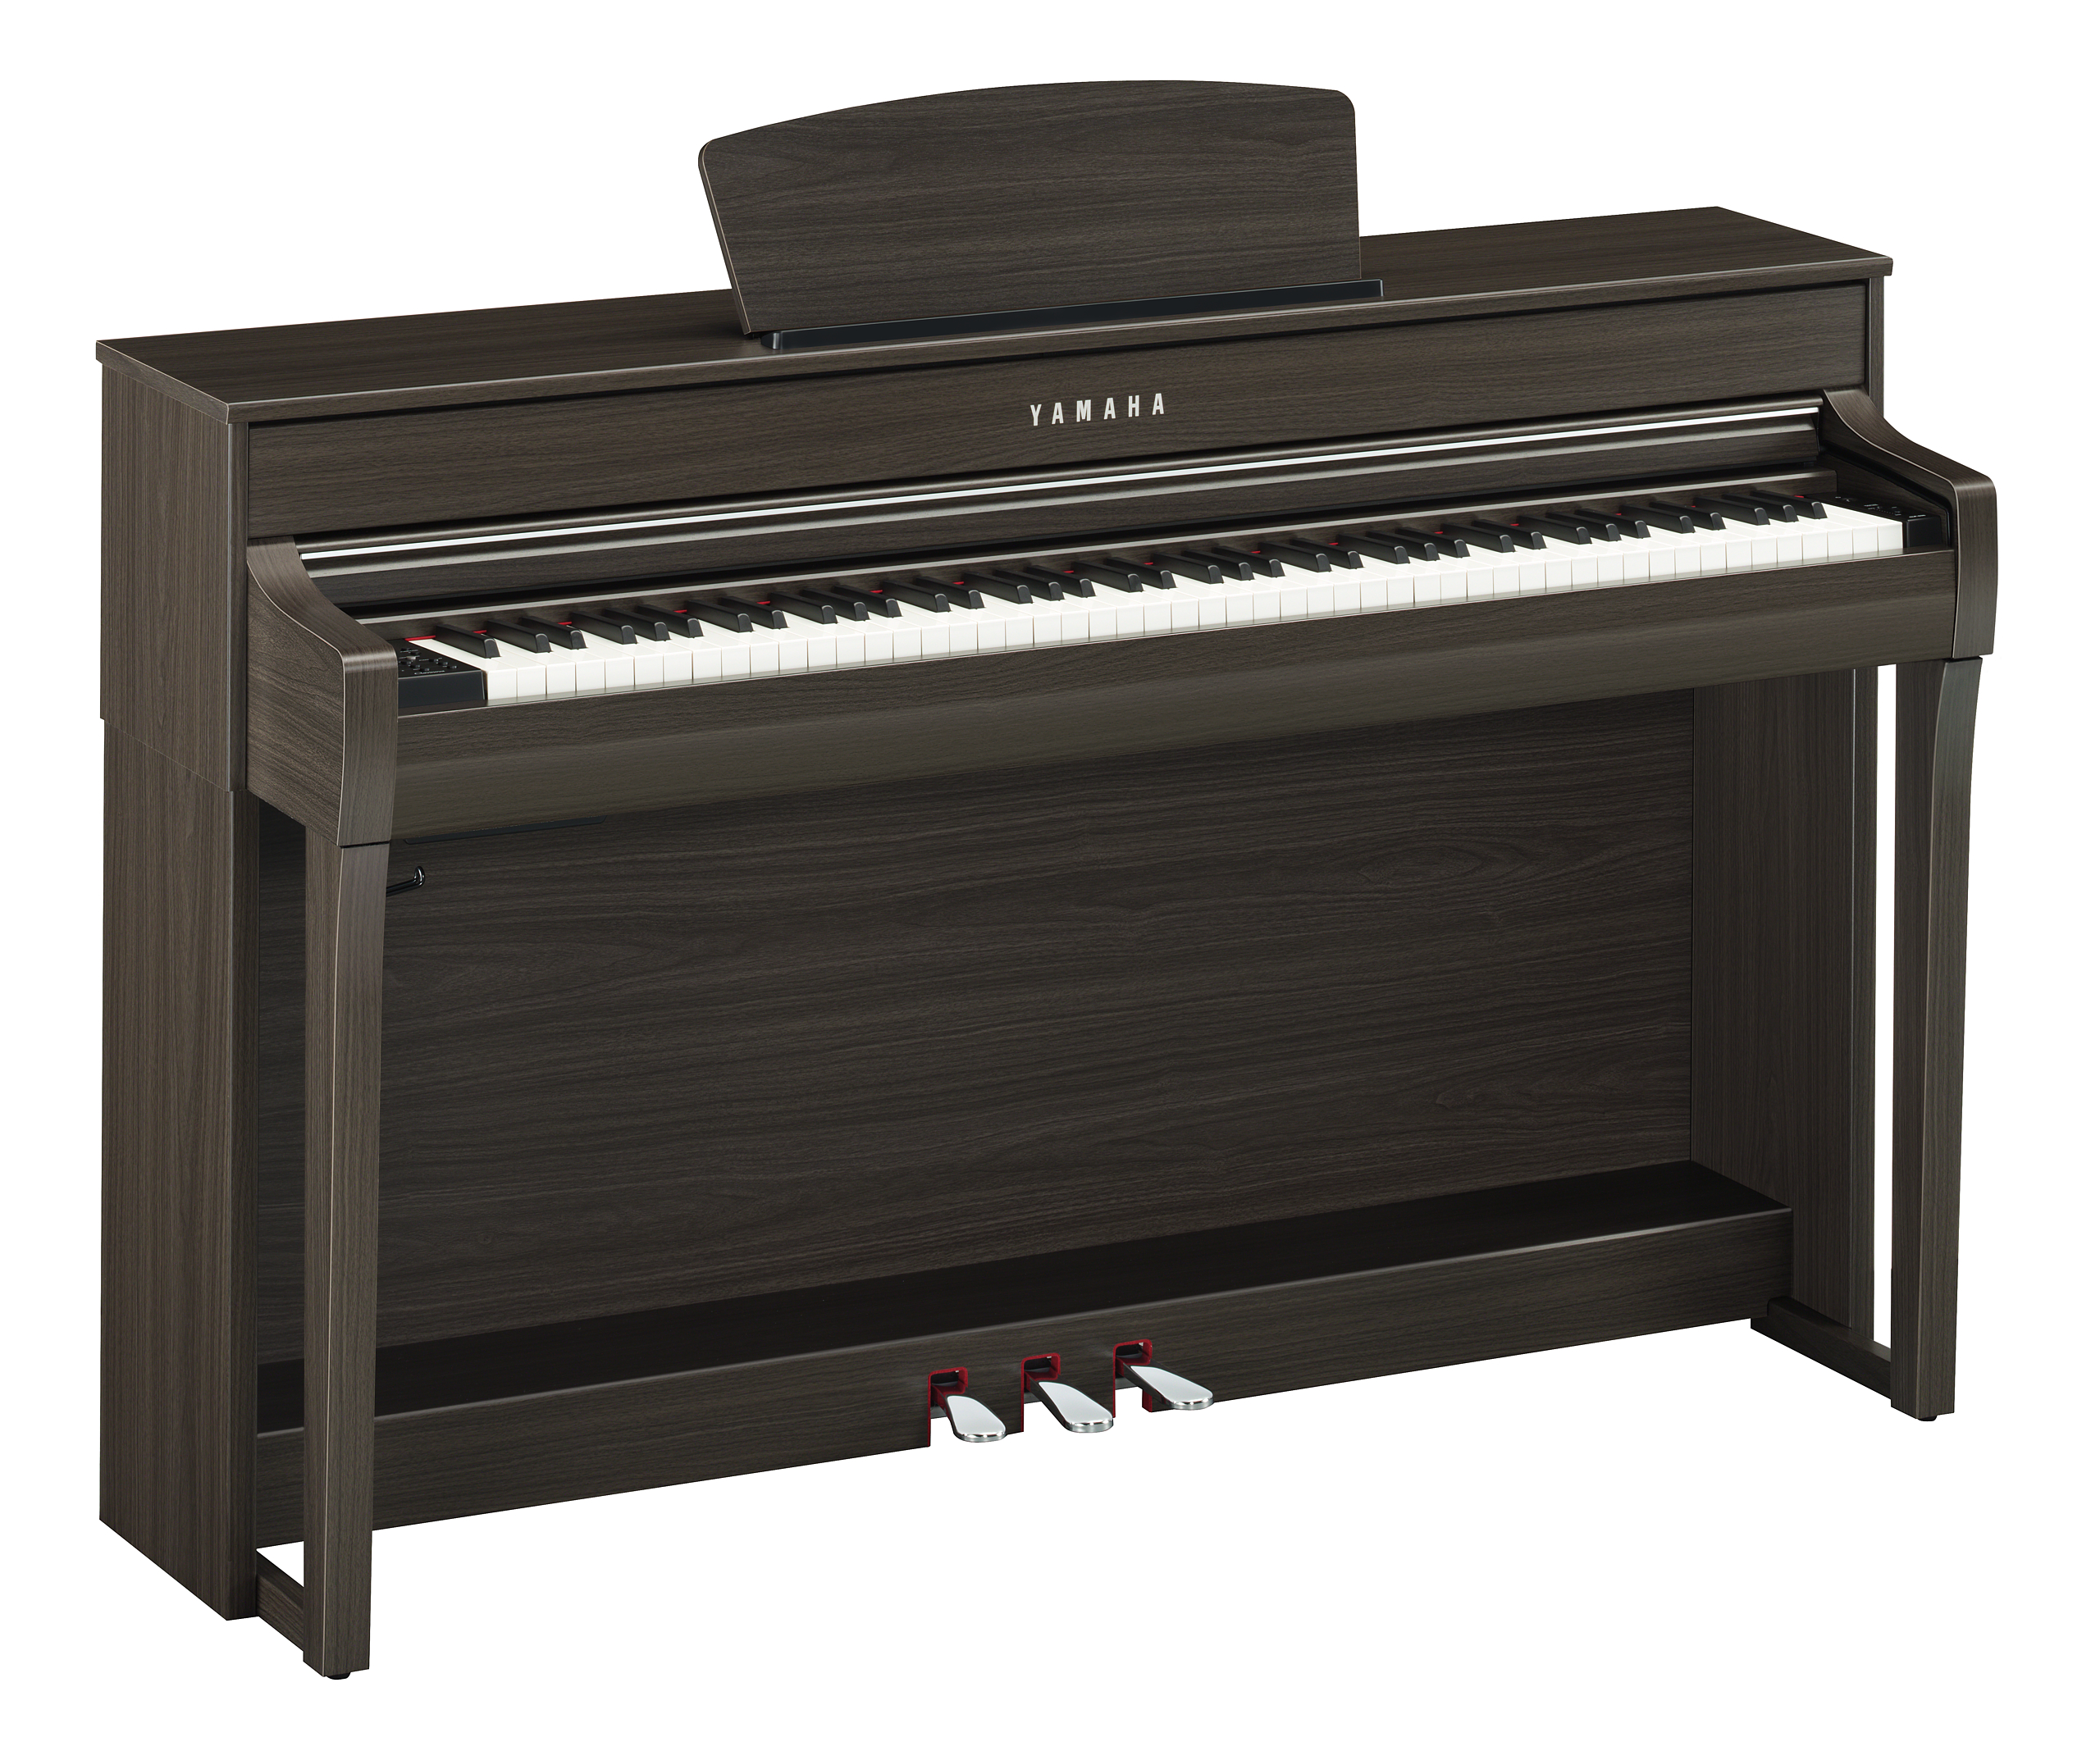 Yamaha Clp735dw - Piano digital con mueble - Variation 1